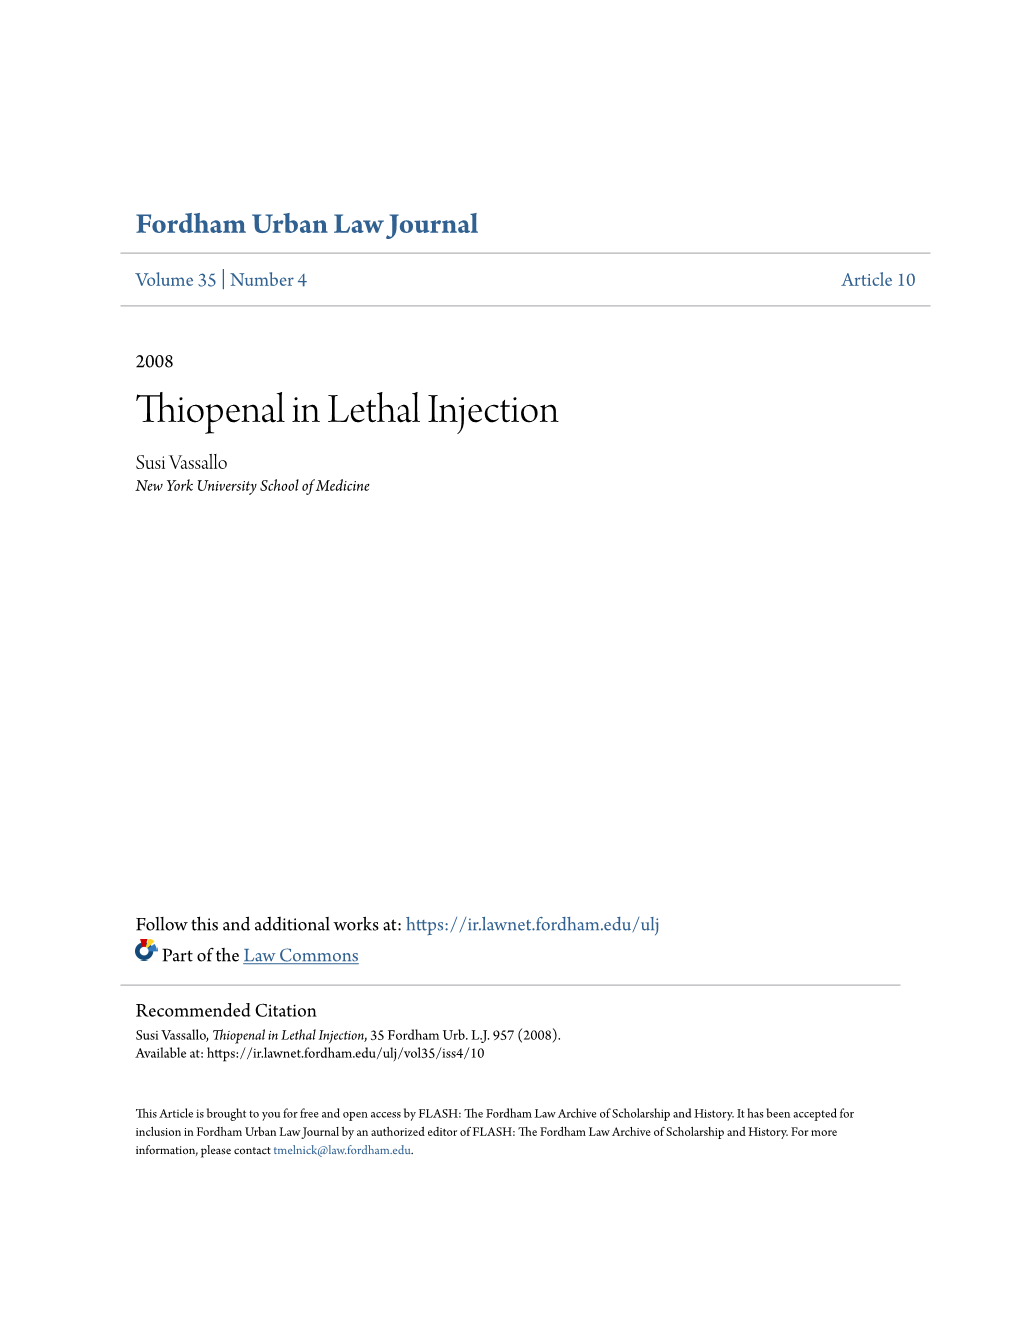 Thiopenal in Lethal Injection Susi Vassallo New York University School of Medicine